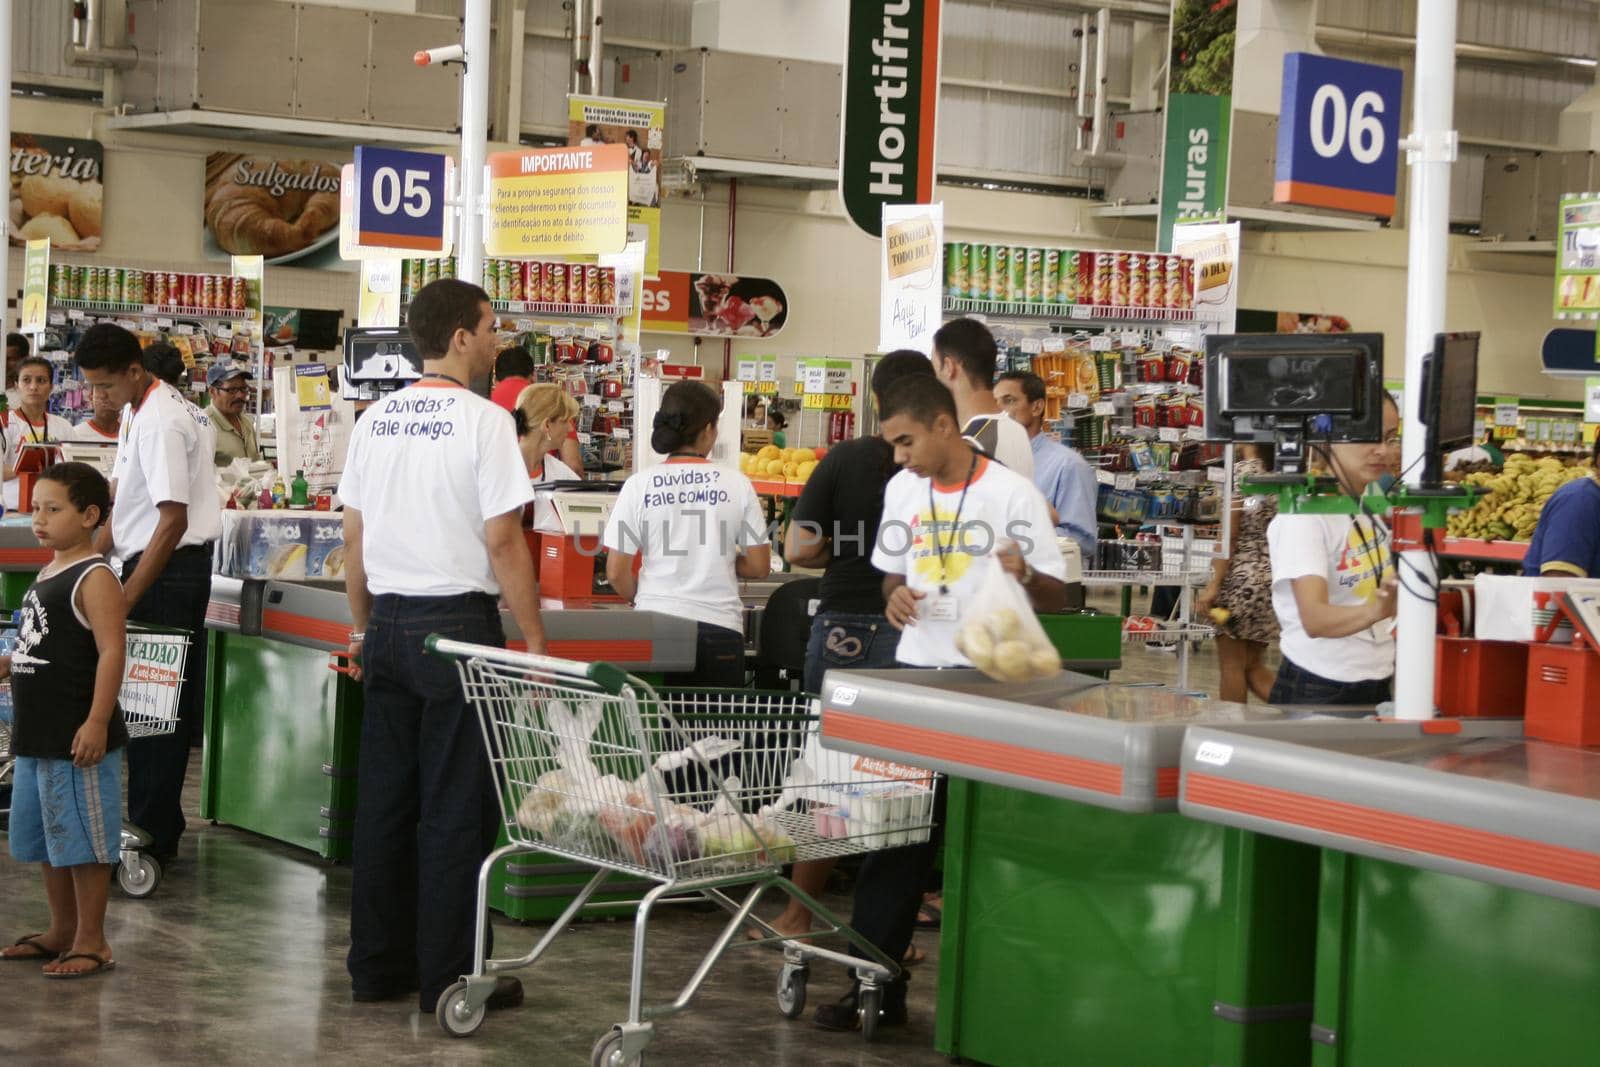 eunapolis, bahia / brazil - august 10, 2009: Customers shop at Atacadao supermarket in the city of Eunapolis.